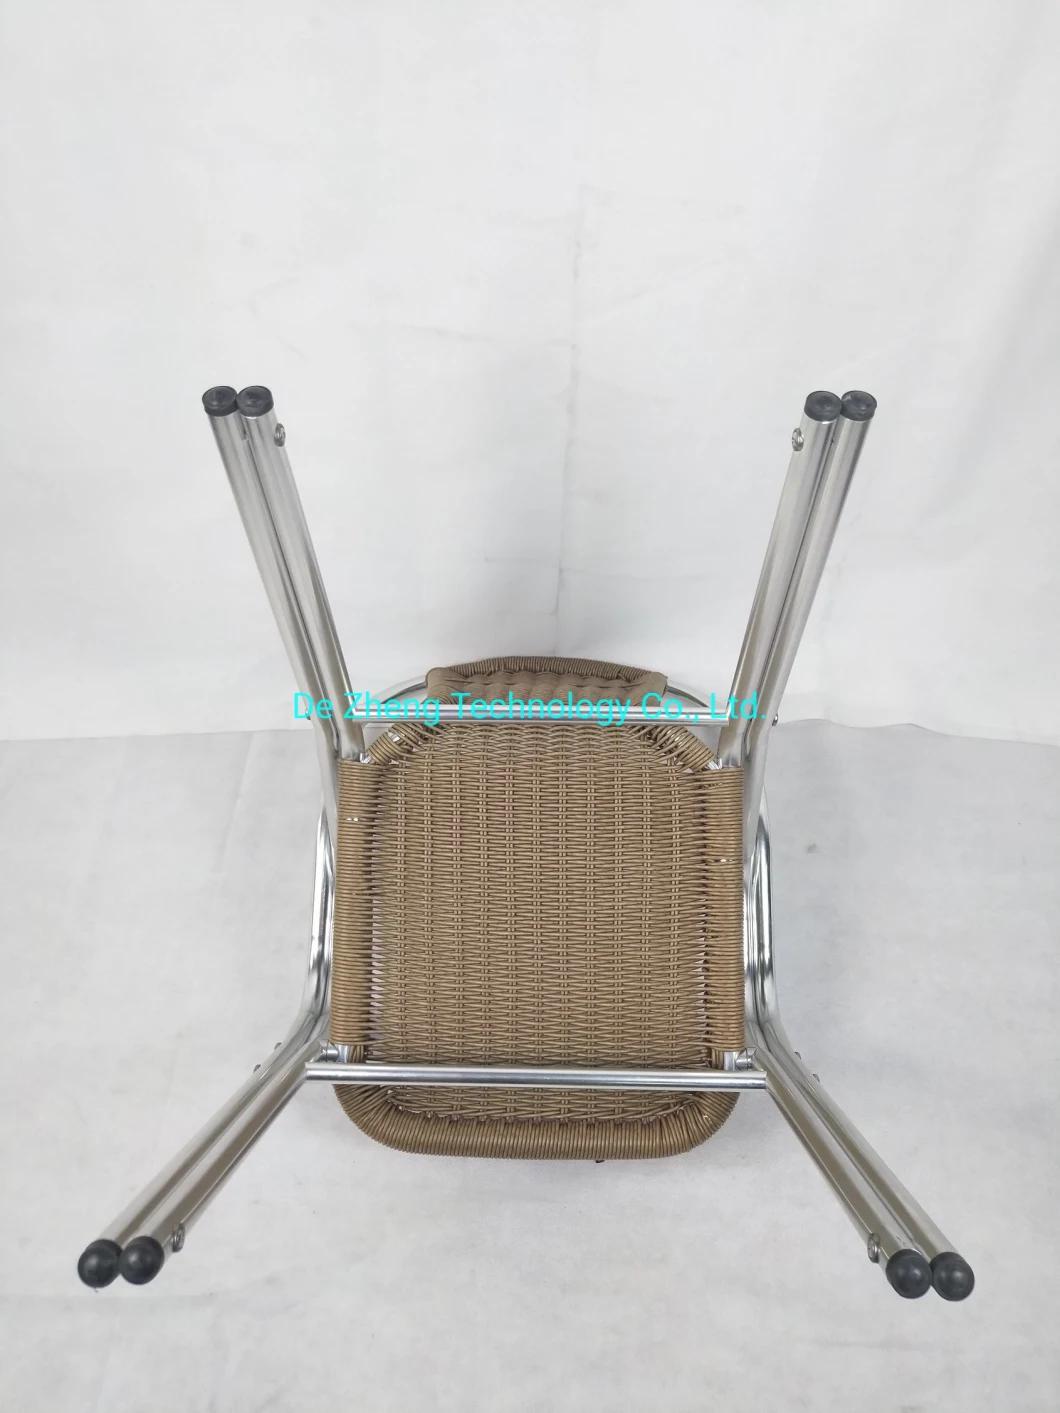 All Resistance Bistro Bar Heavy Duty Outdoor Garden Strong Steel Wire PE Rattan Chair